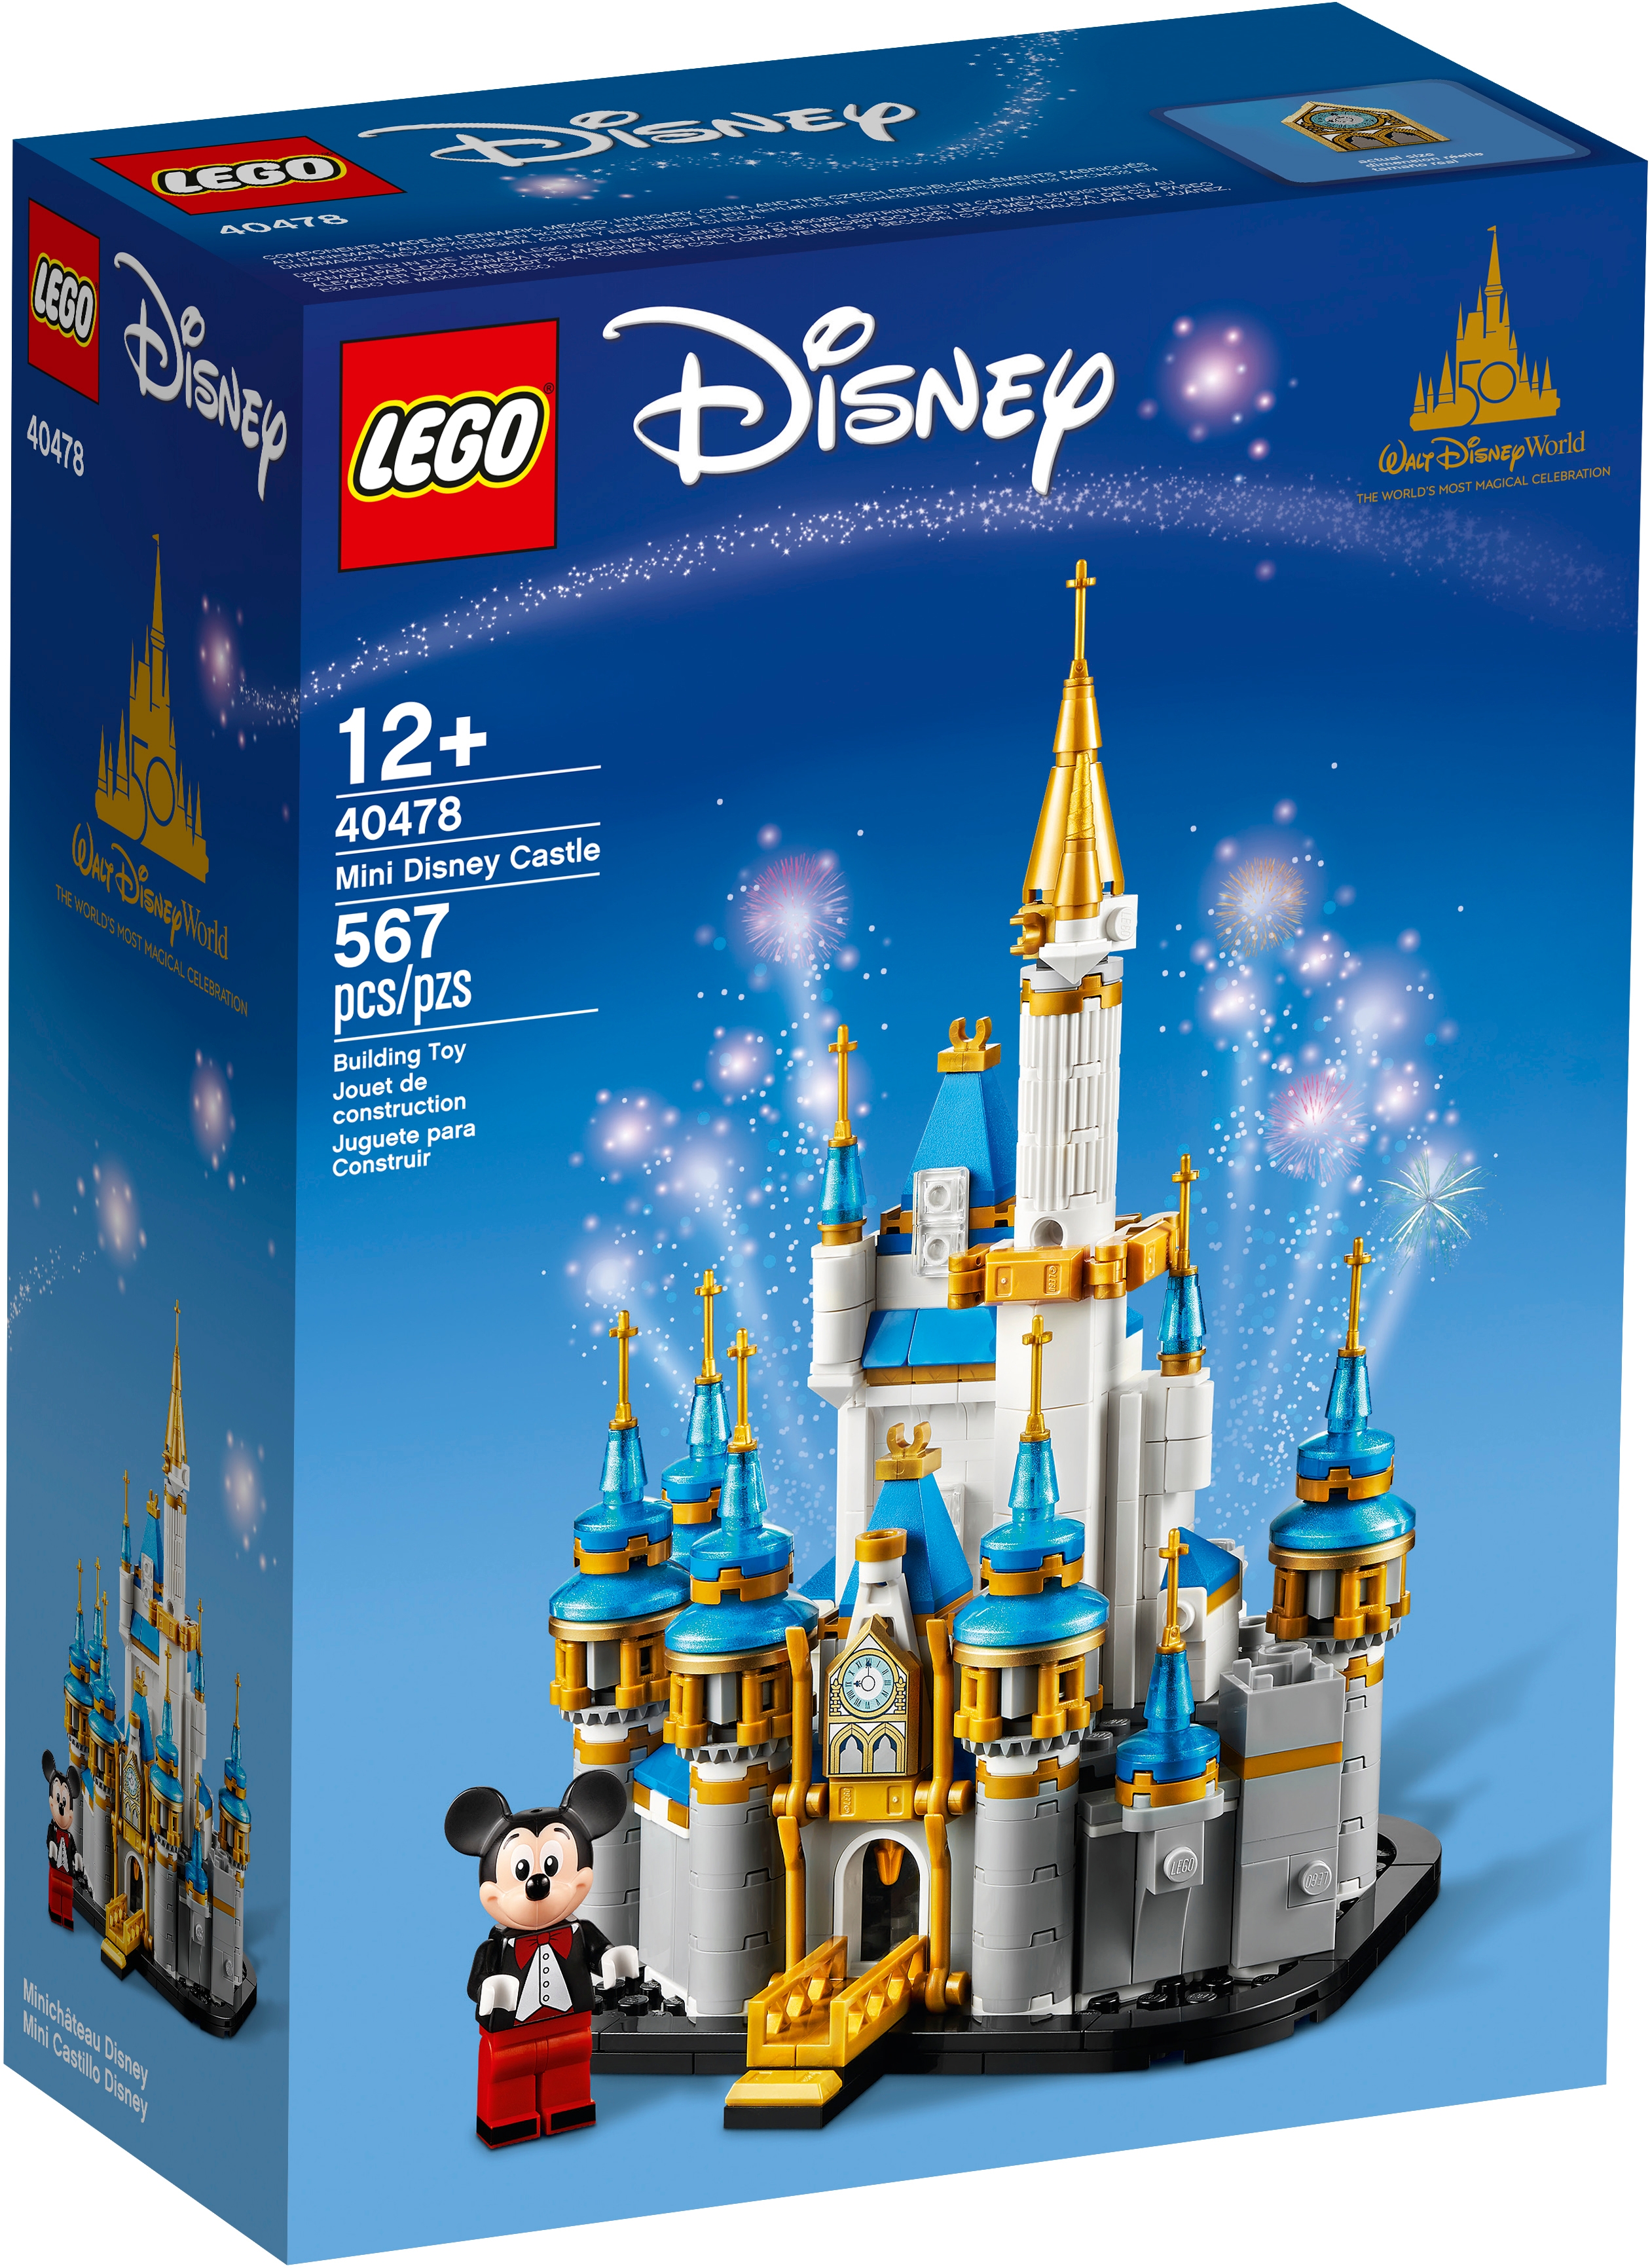 Mini Disney Castle Disney Buy Online At The Official Lego Shop Es